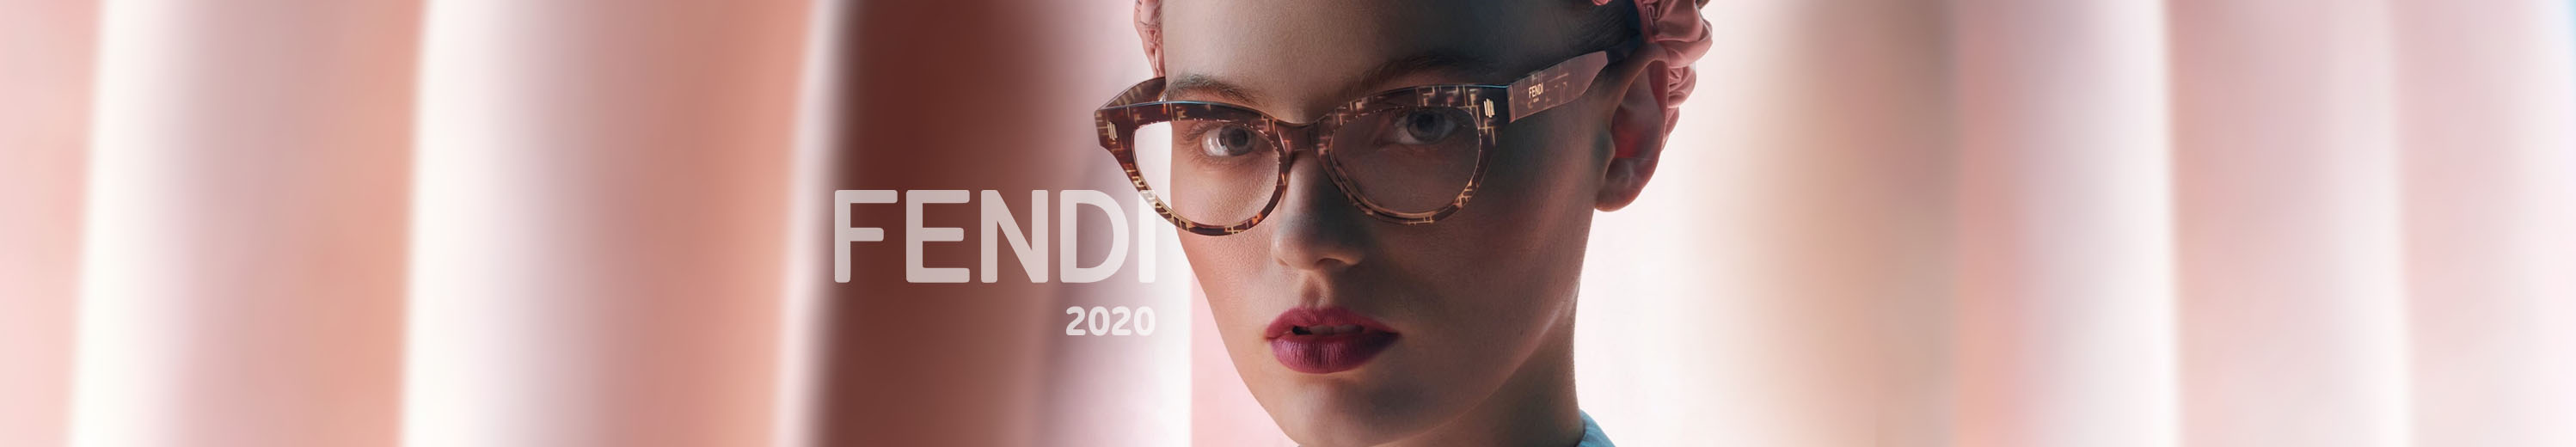 Fendi 2020 Eyewear Collection